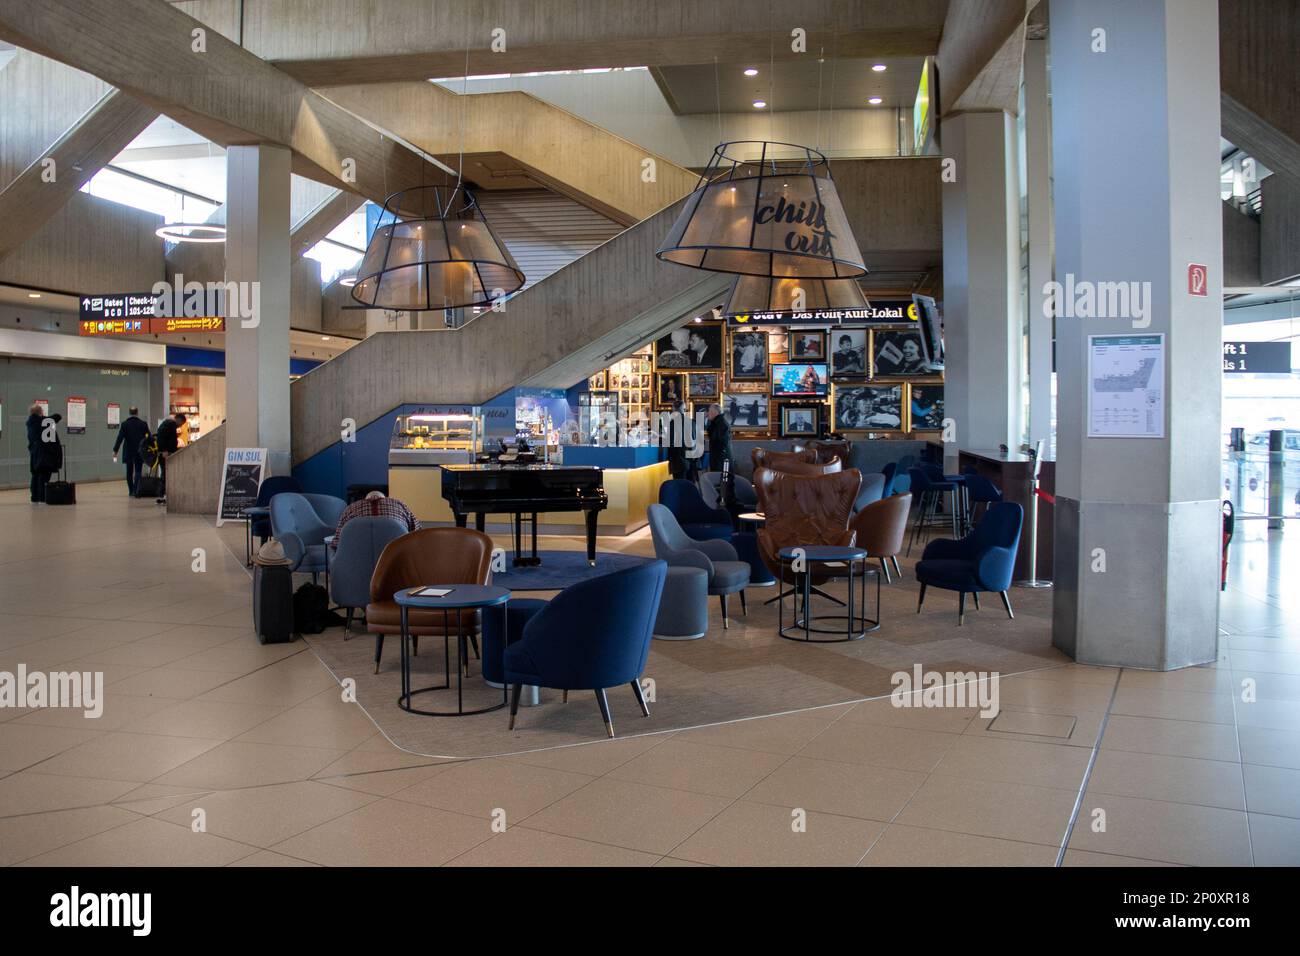 Cafe inside Koln/Bonn Airport. Credit: Sinai Noor / Alamy Stock Photo Stock Photo